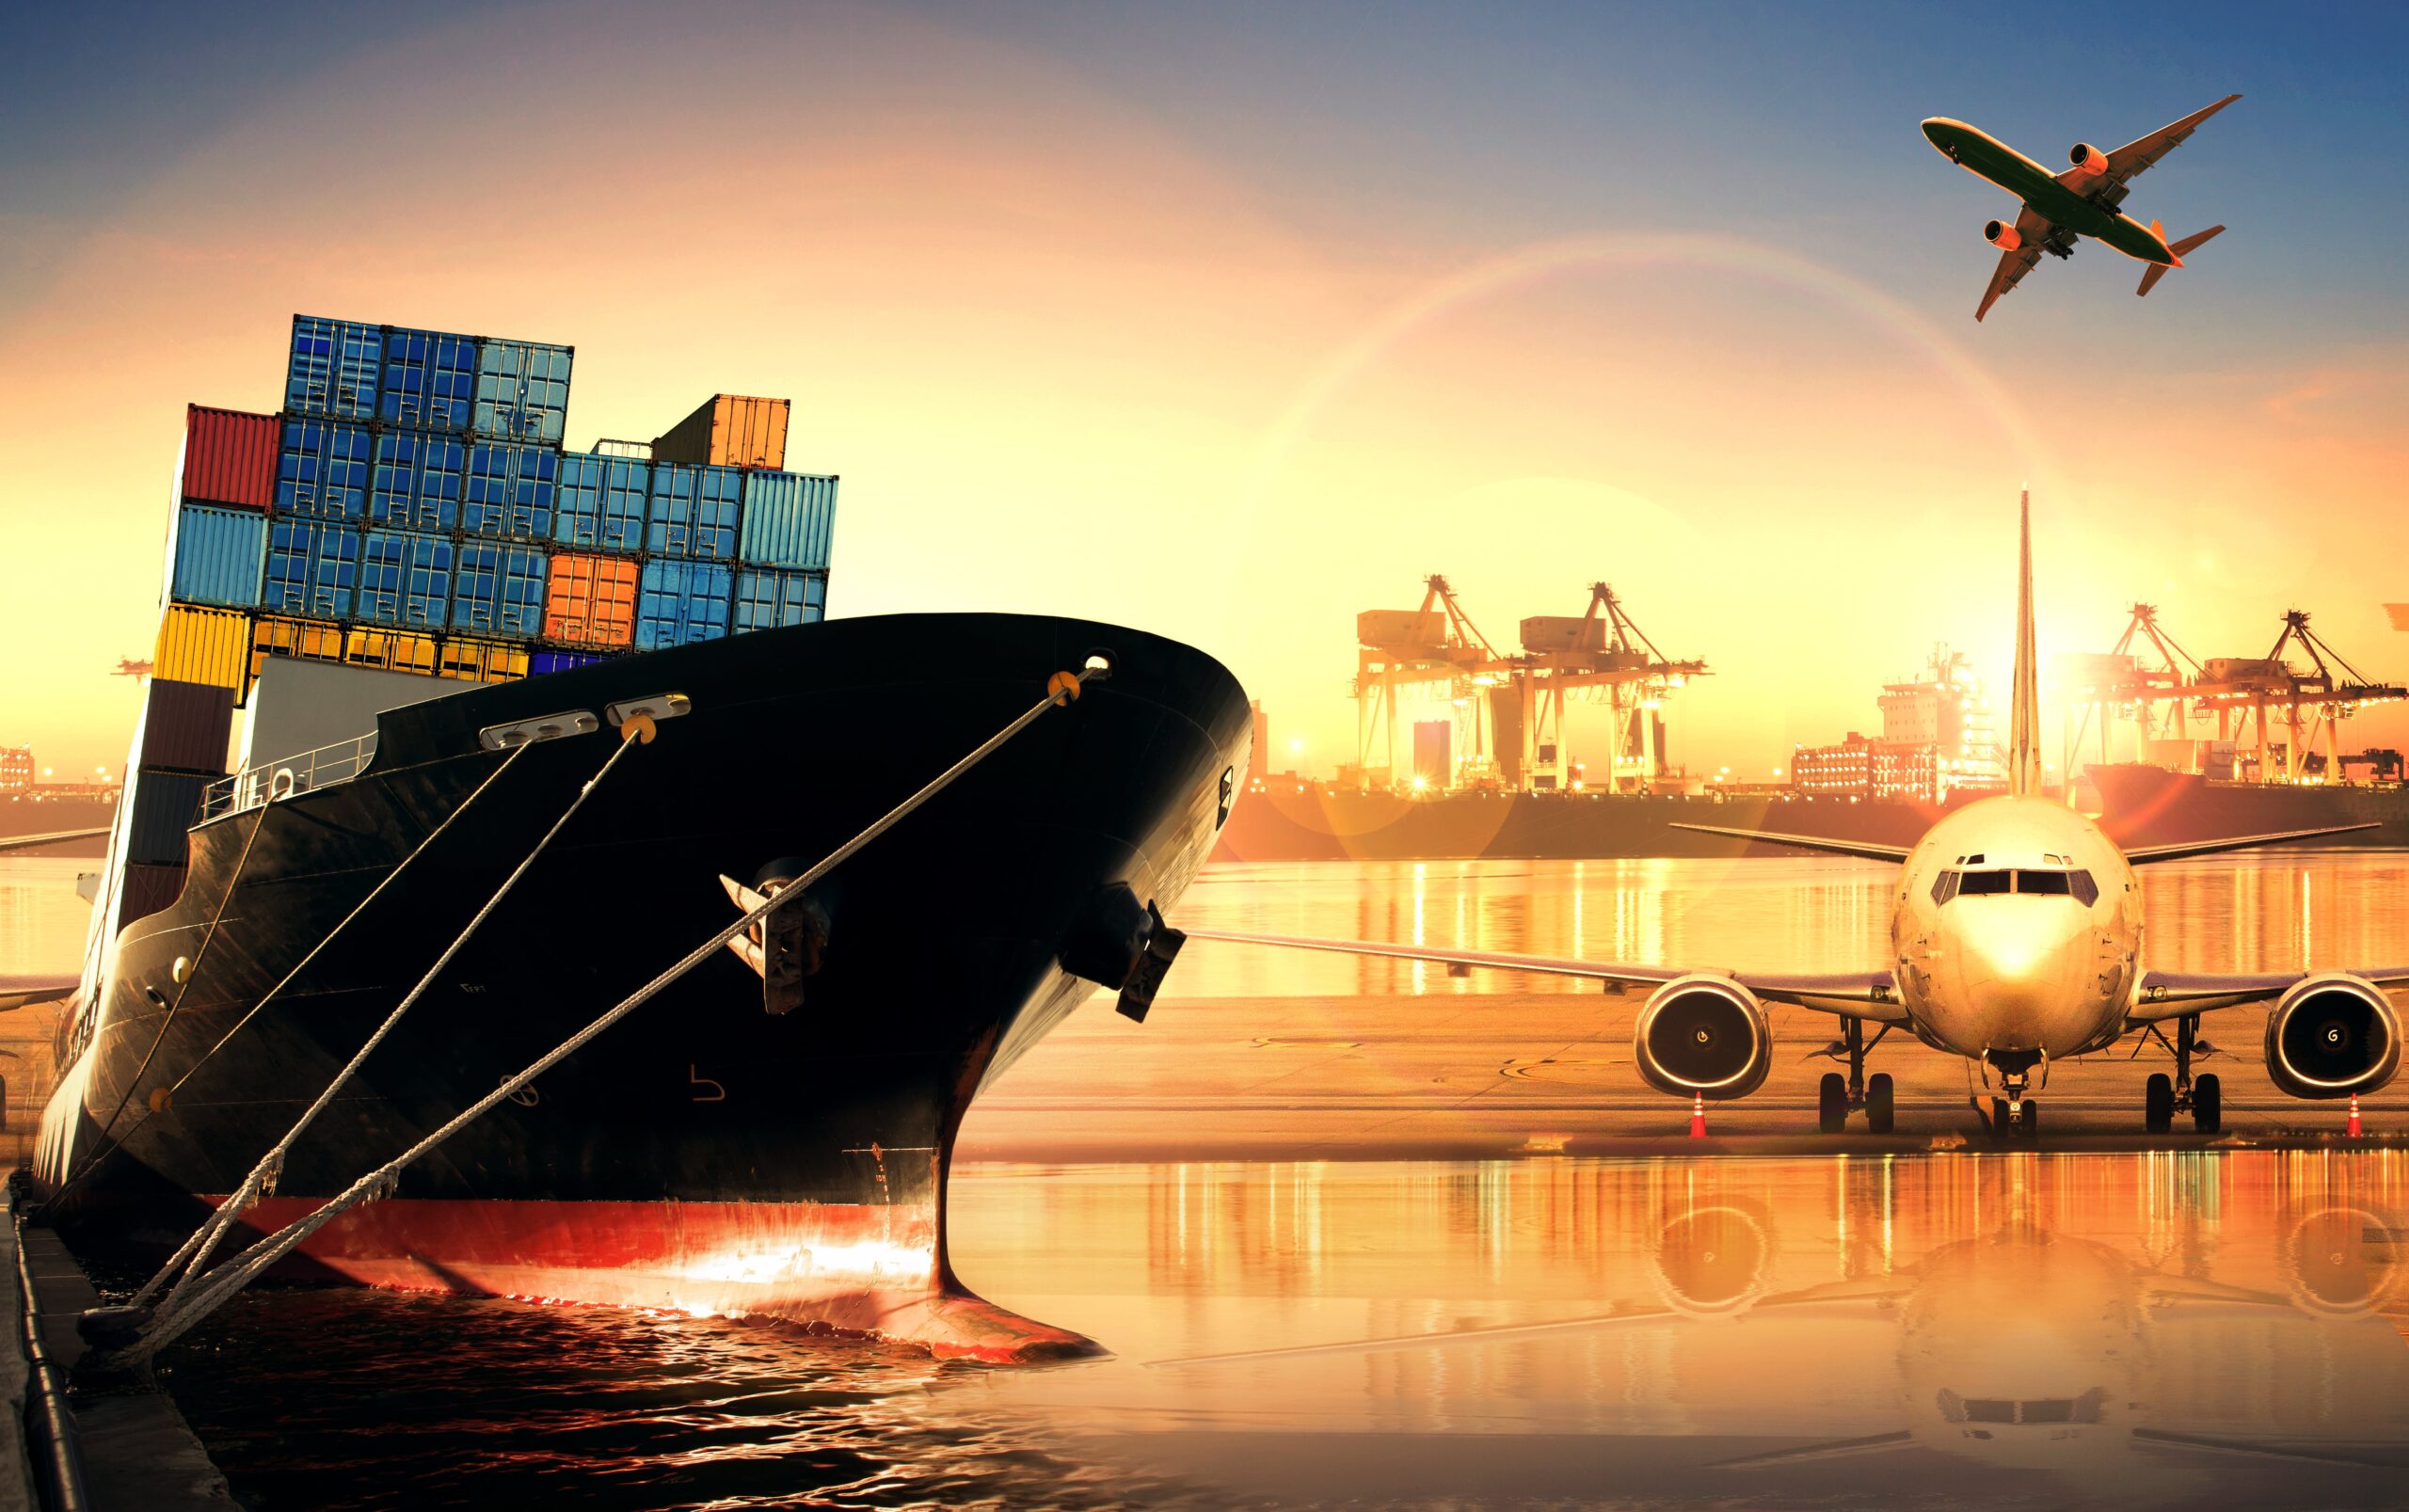 Hire Best Logistics Service Provider To Get A Proper Shipment